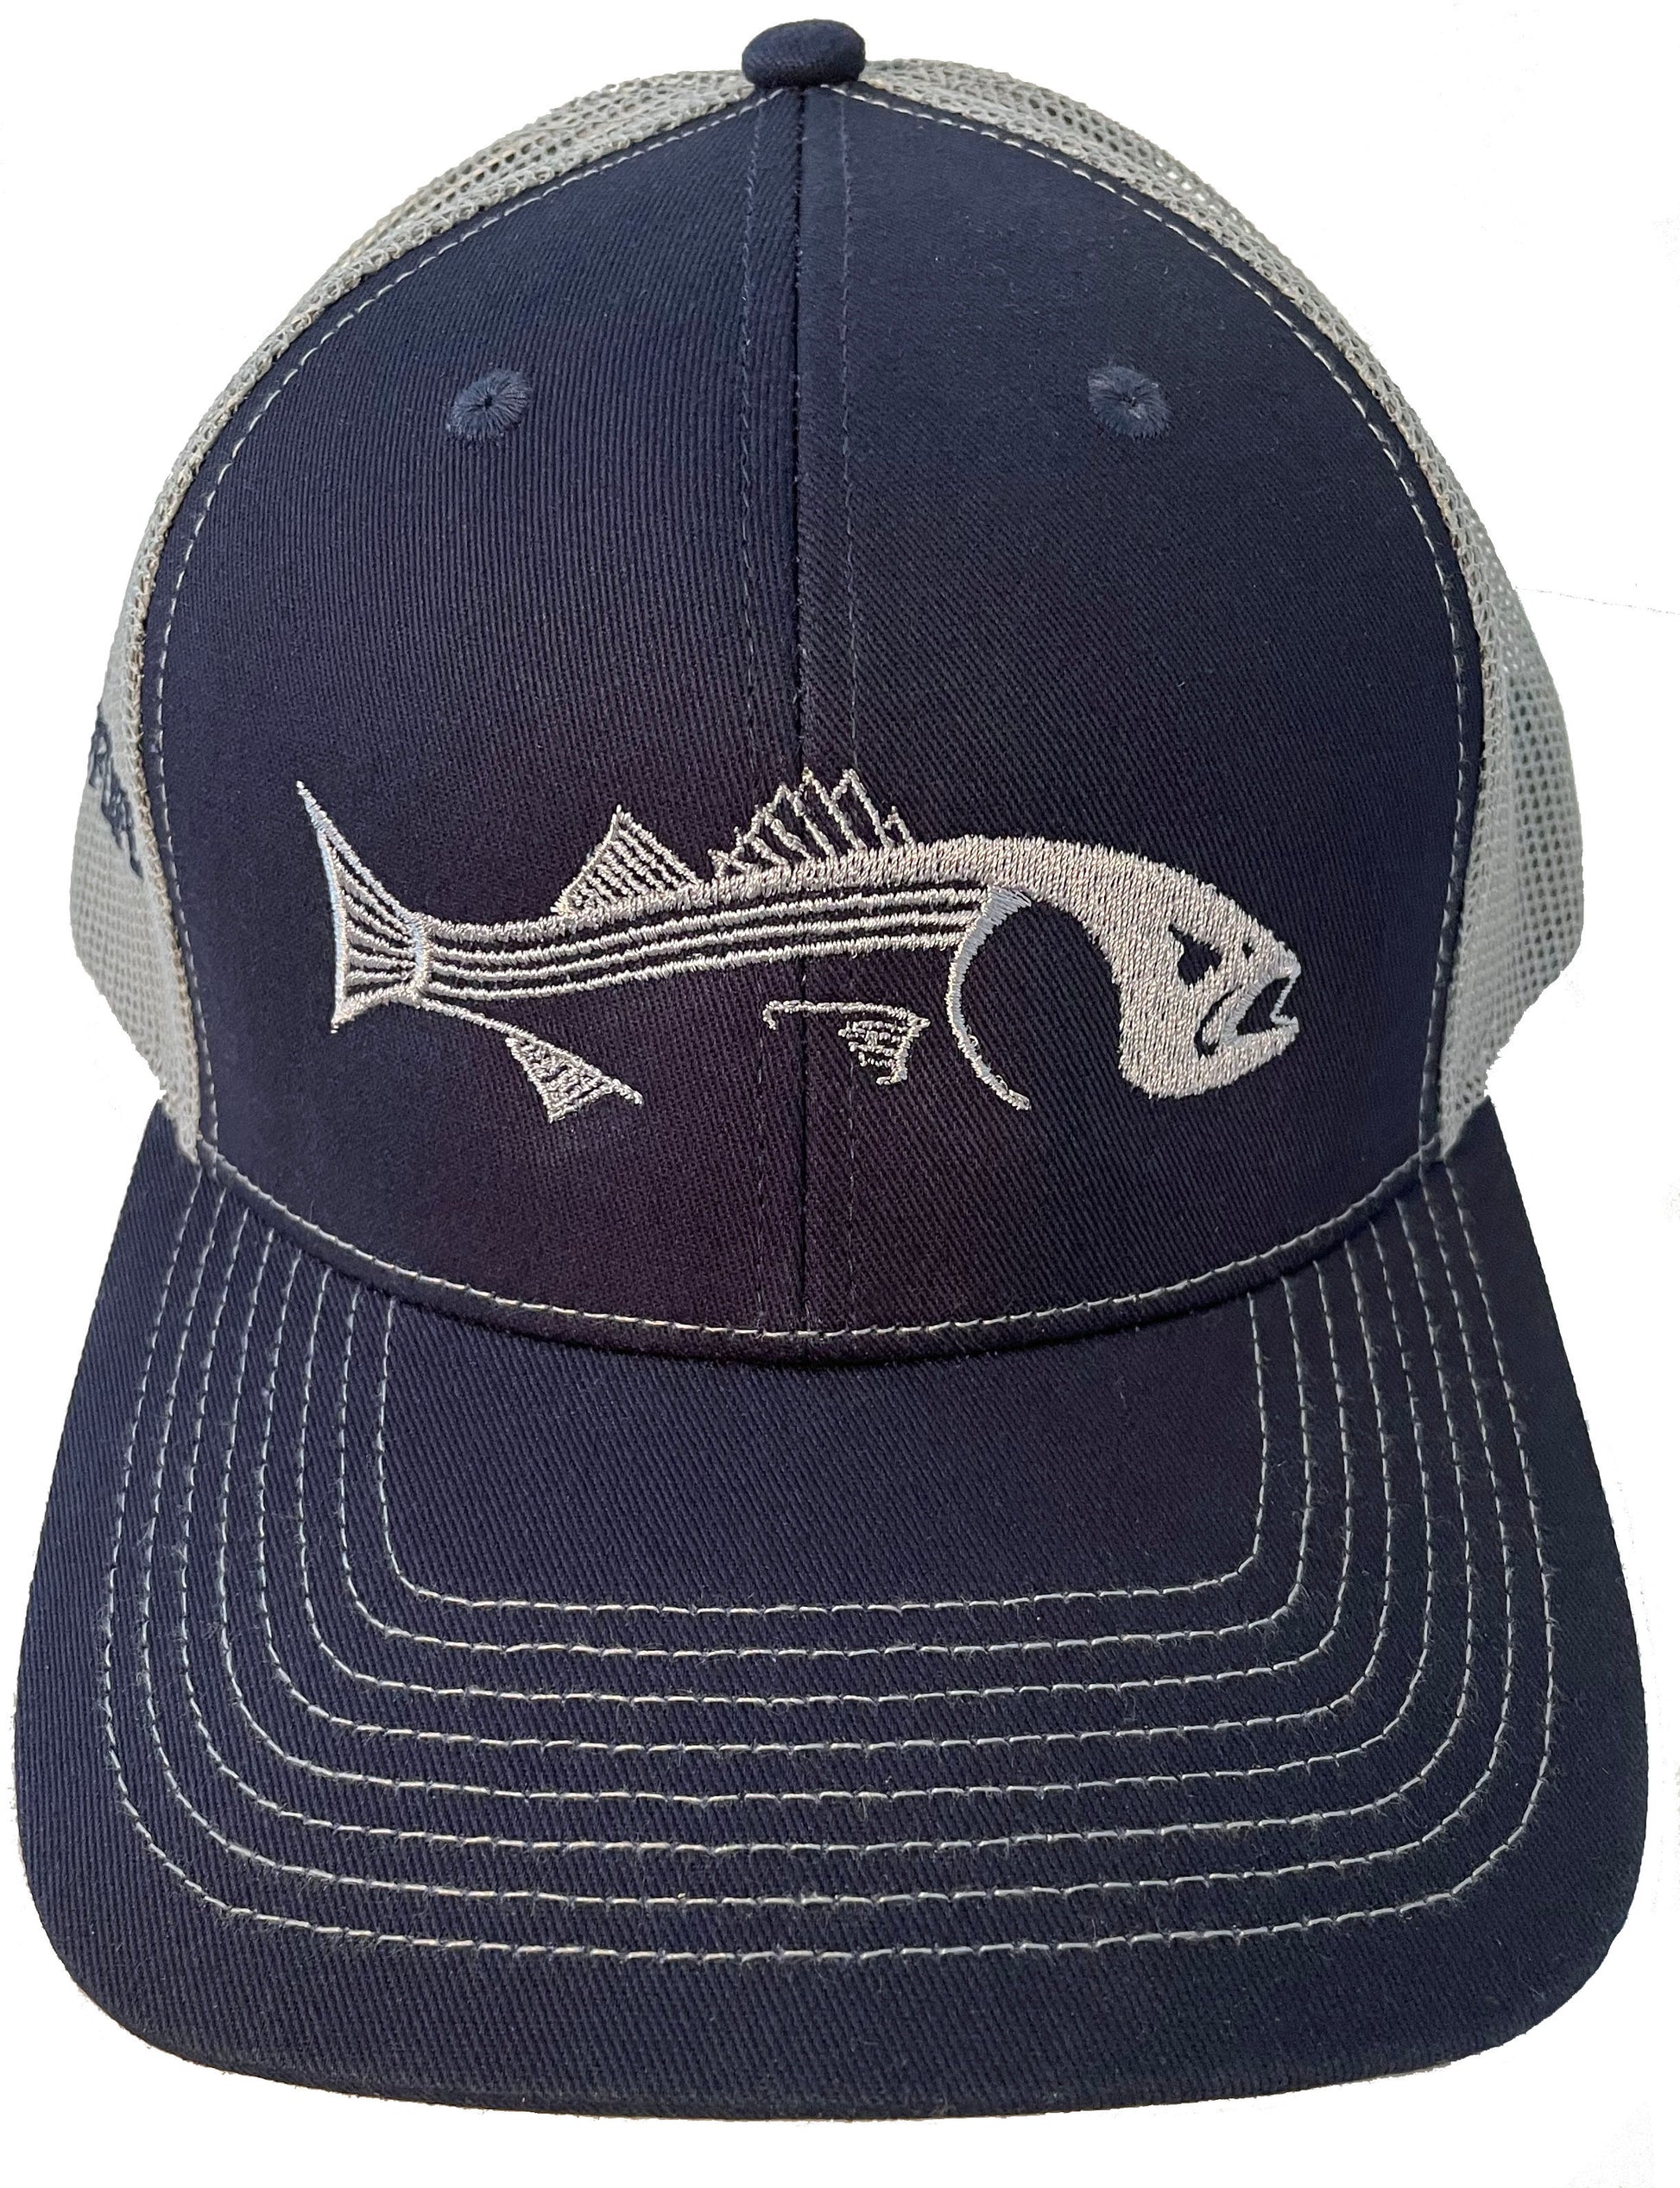 Striped Bass Navy Blue/Gray Striper Meshback Trucker Hats by Skiff Lif –  Skiff Life